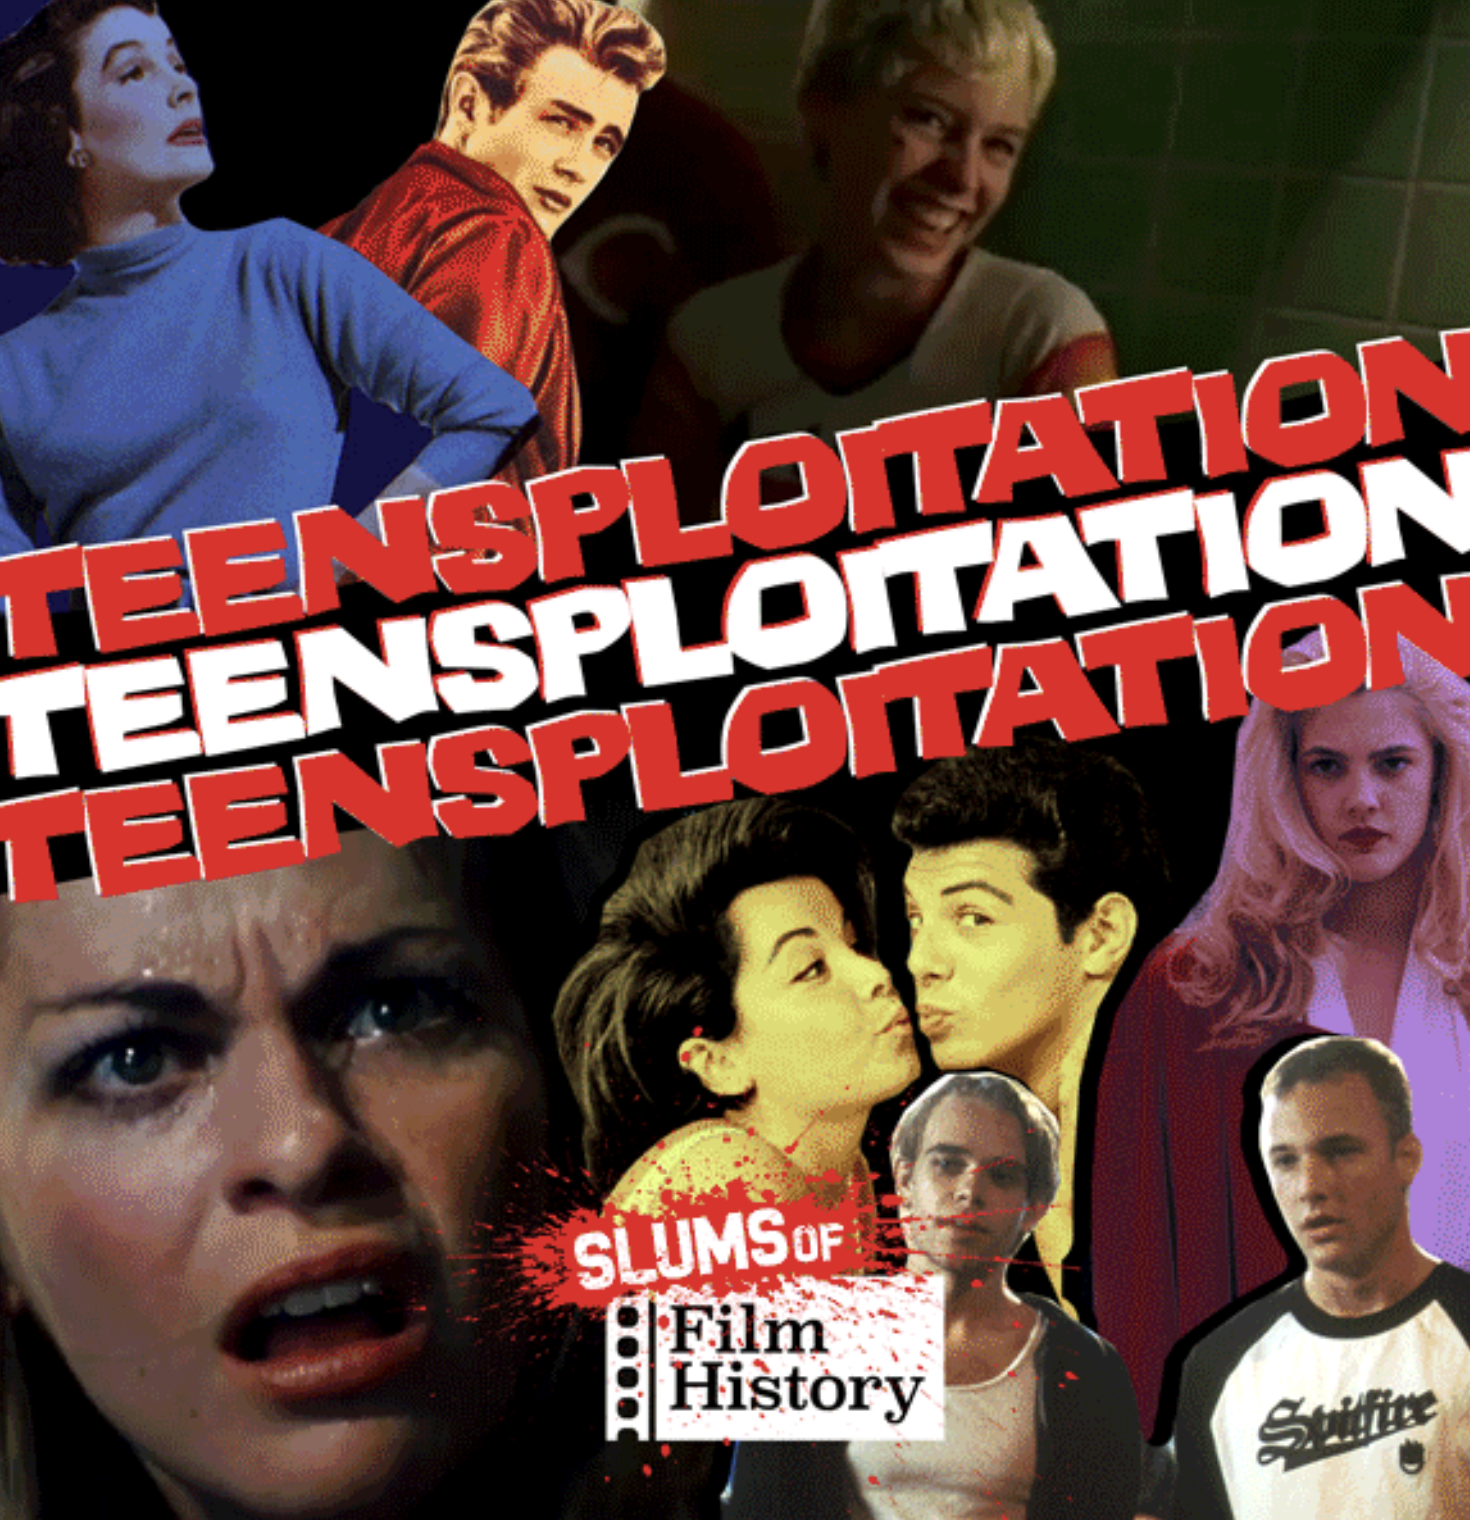 Episode 79: Teensploitation